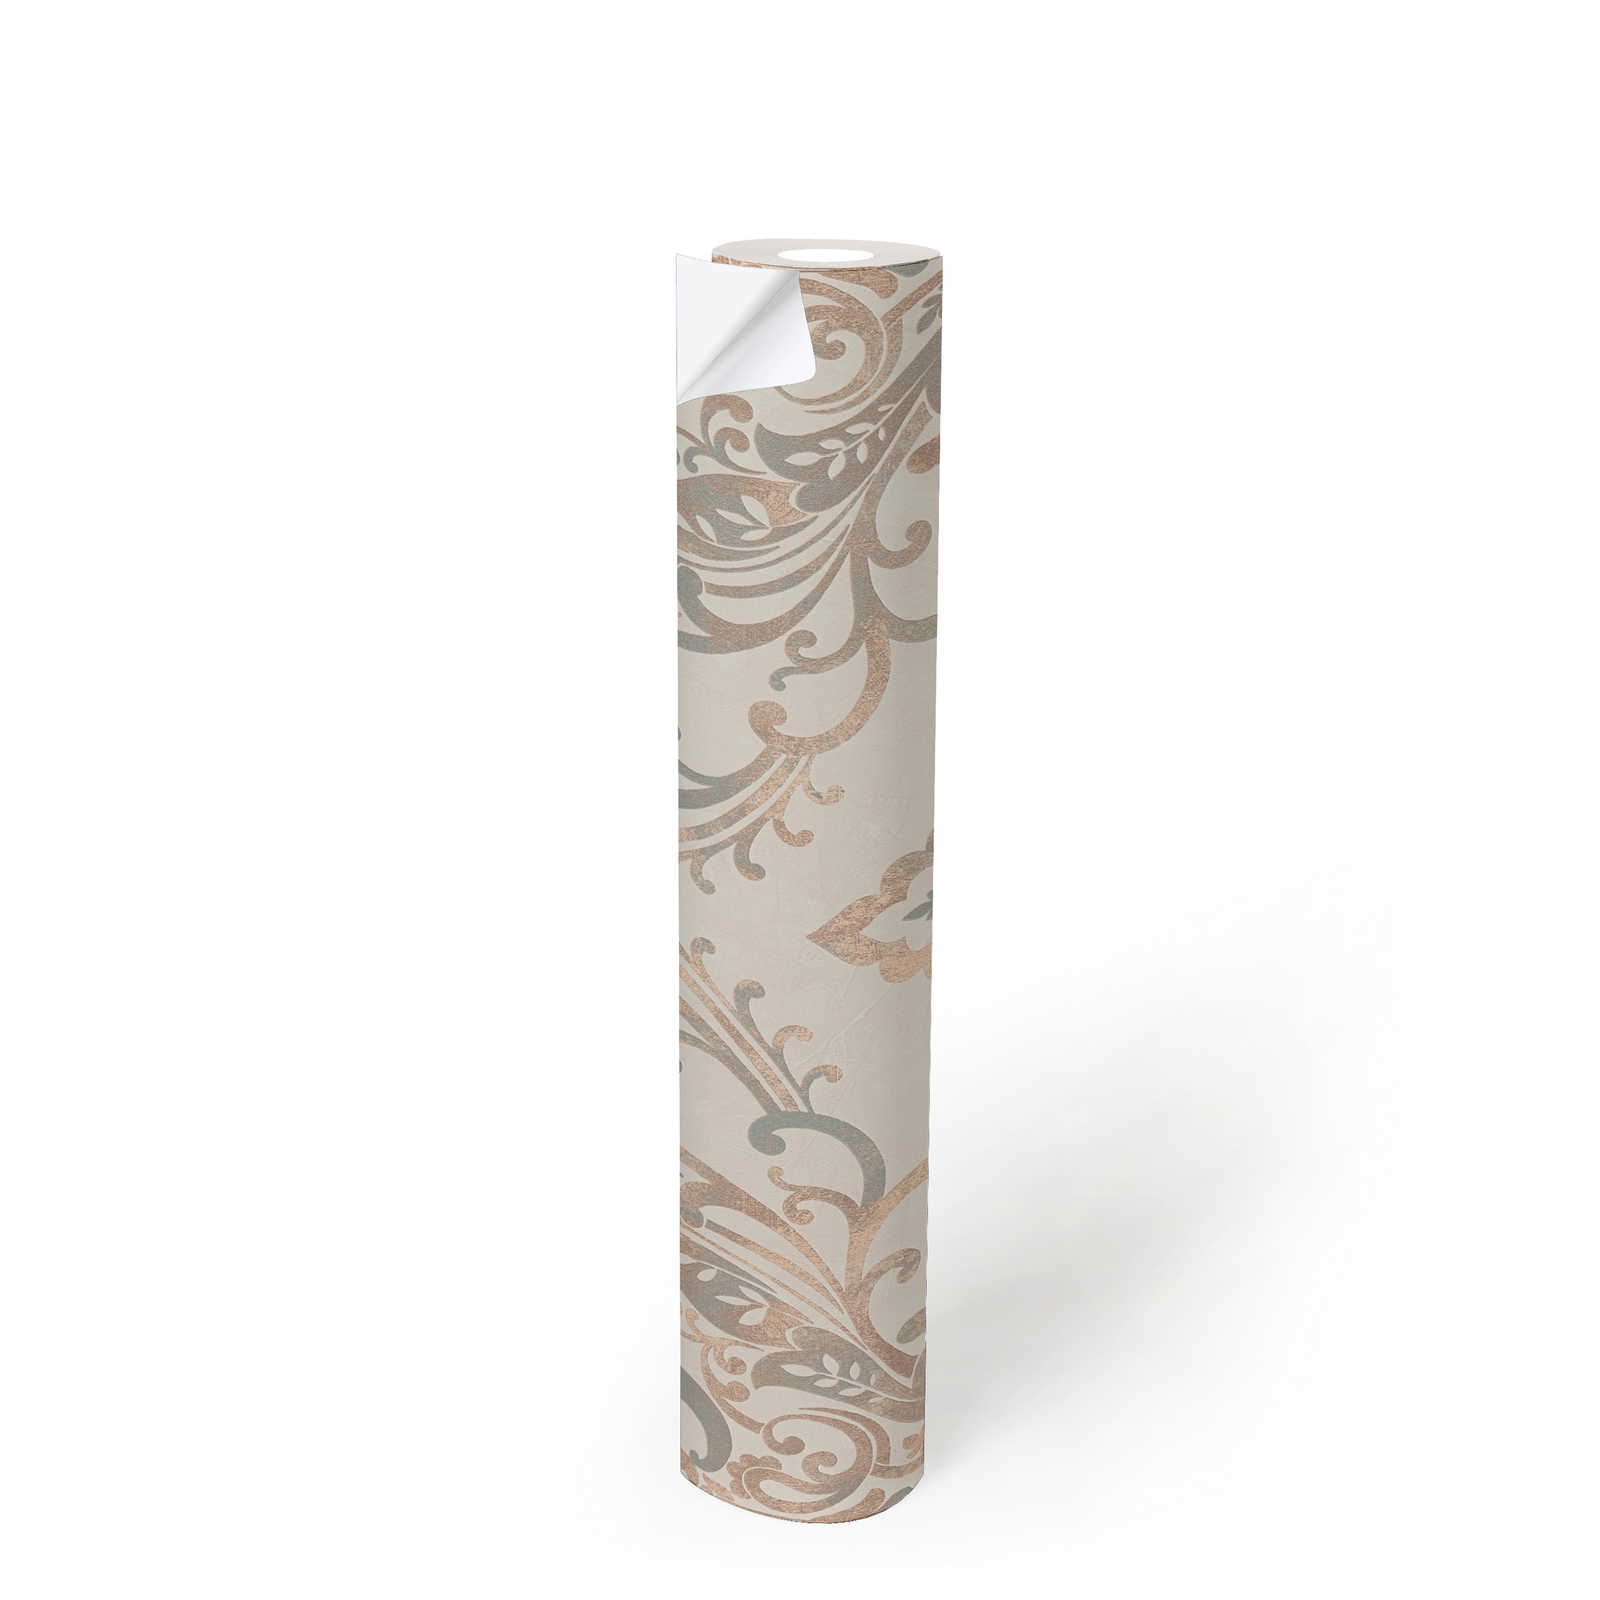             Selbstklebende Tapete | Ornament-Muster mit Metallic Effekt – Beige, Creme
        